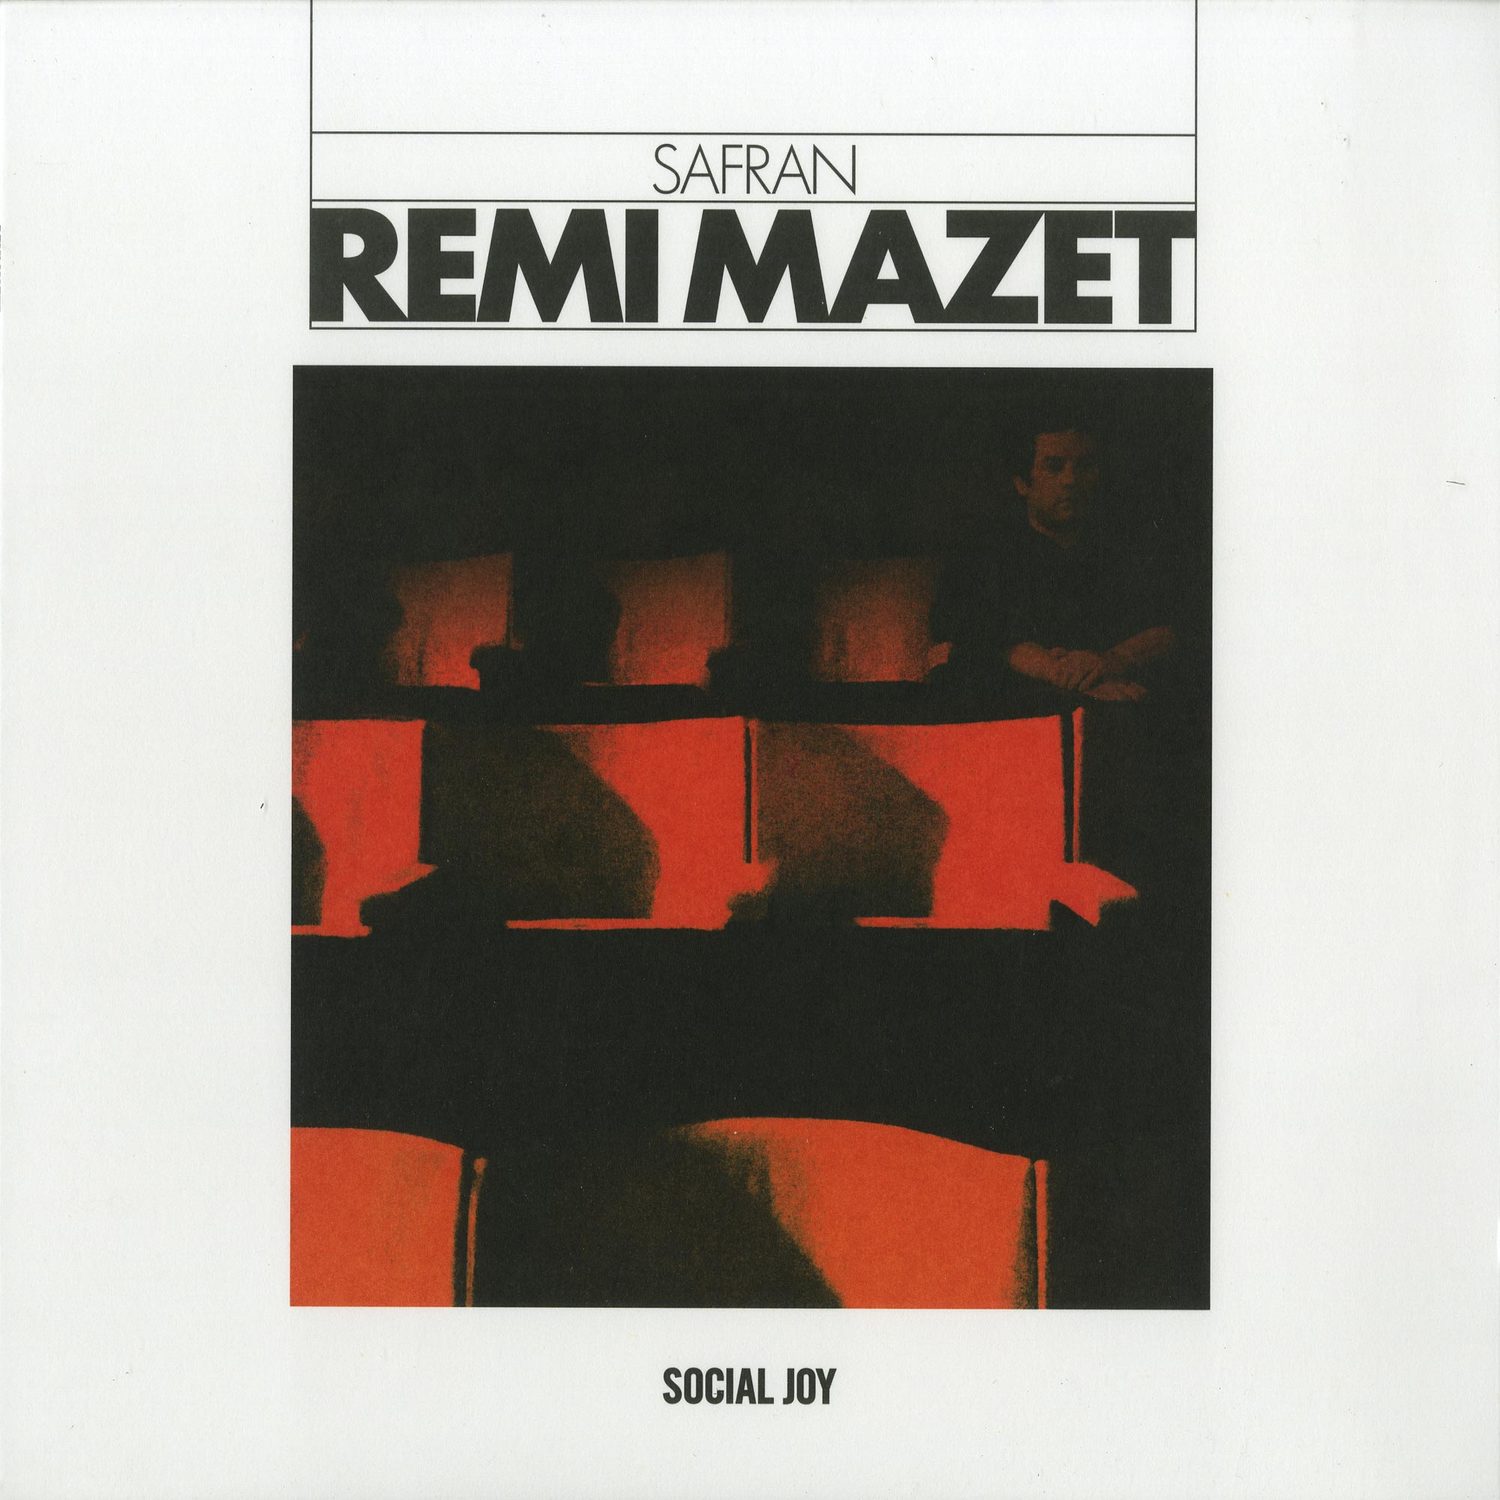 Remi Mazet - SAFRAN